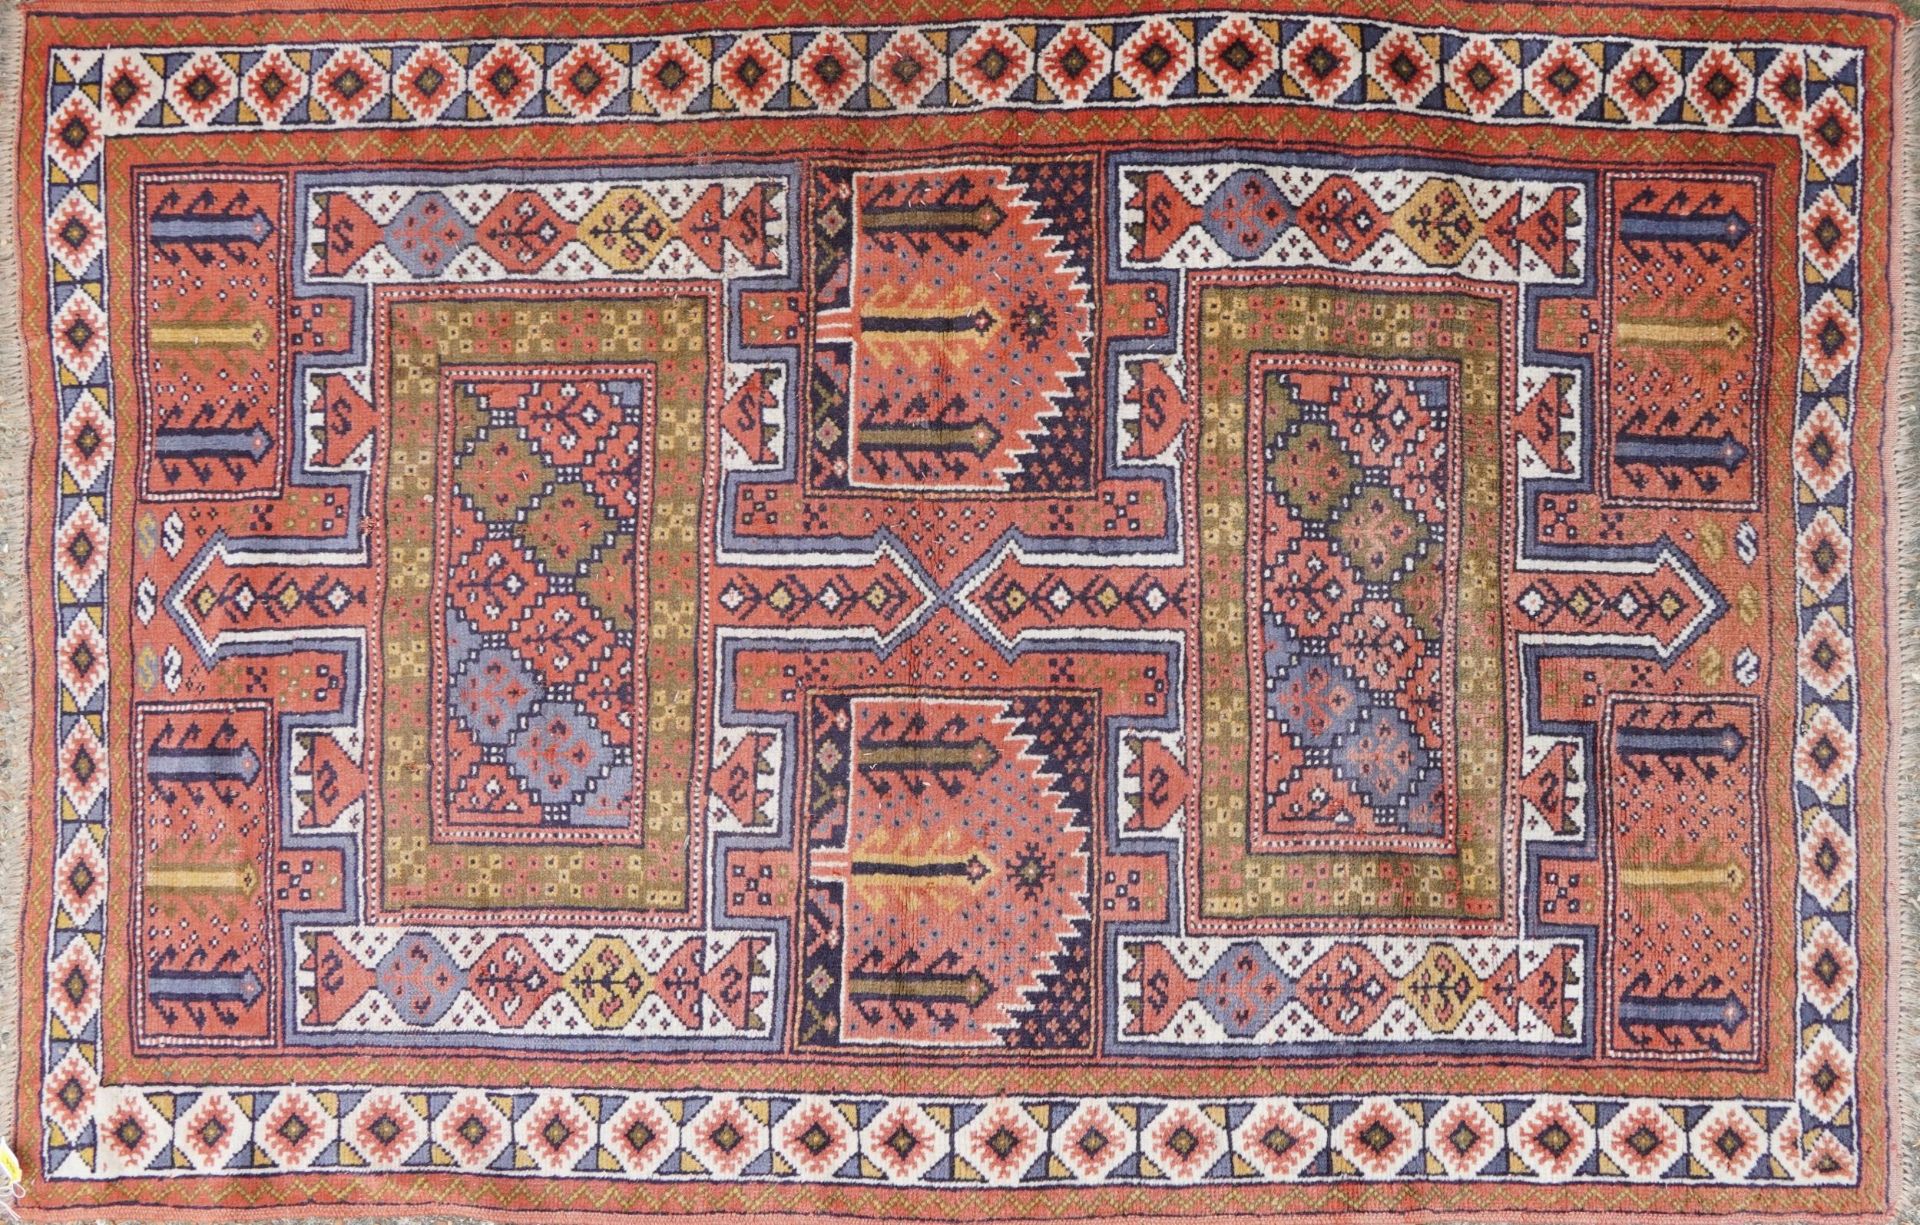 Rectangular Turkish rug having a floral design, 185cm x 170cm : For further information on this